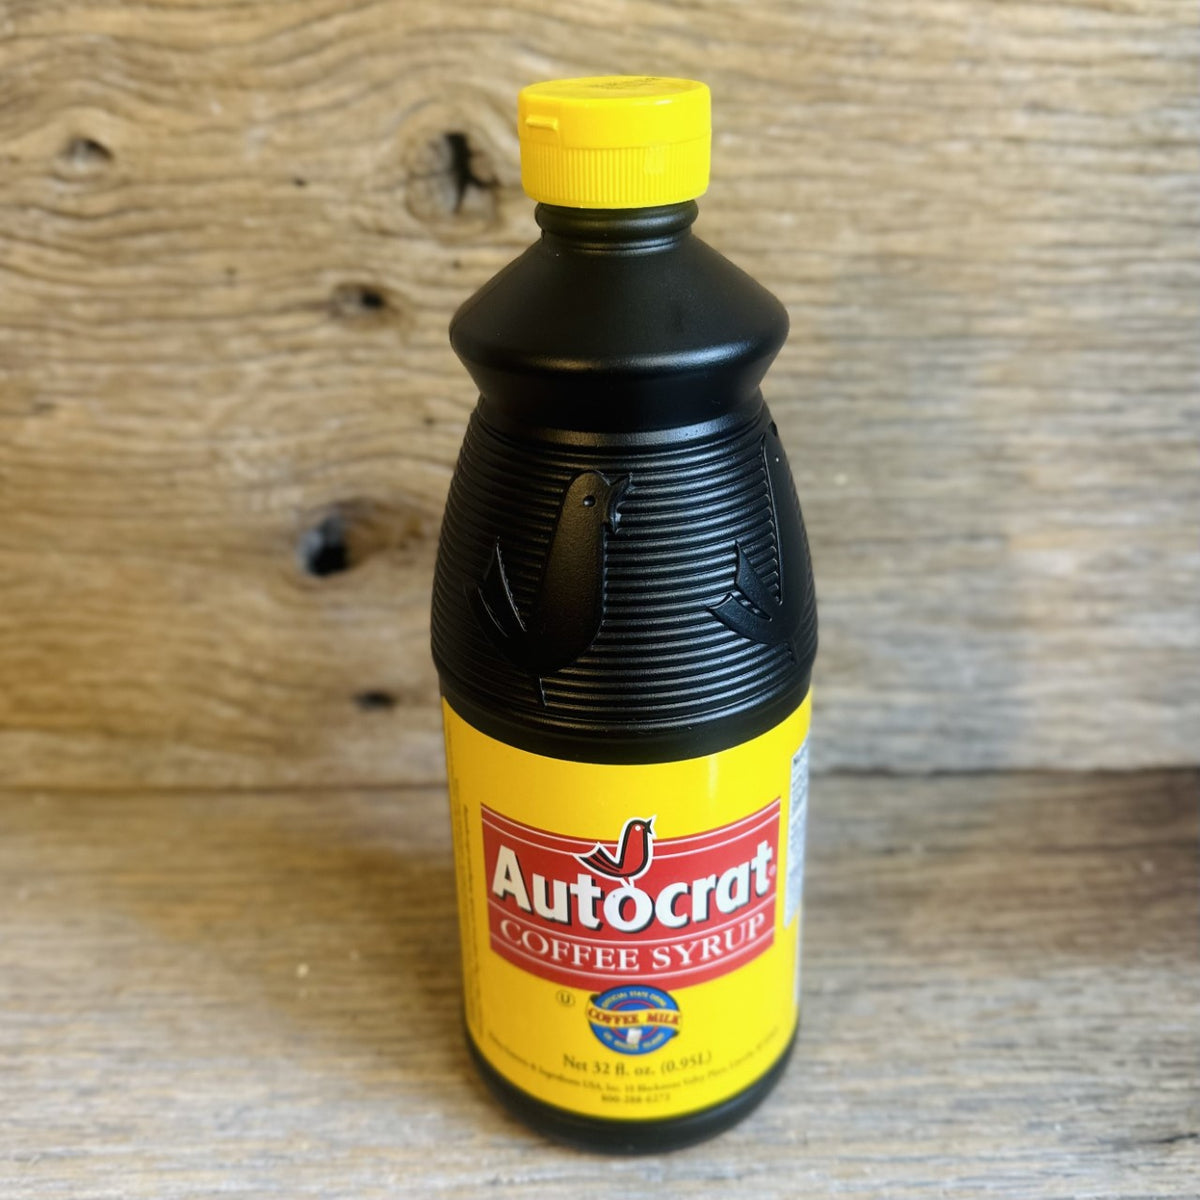 Autocrat Coffee Syrup, 32 oz